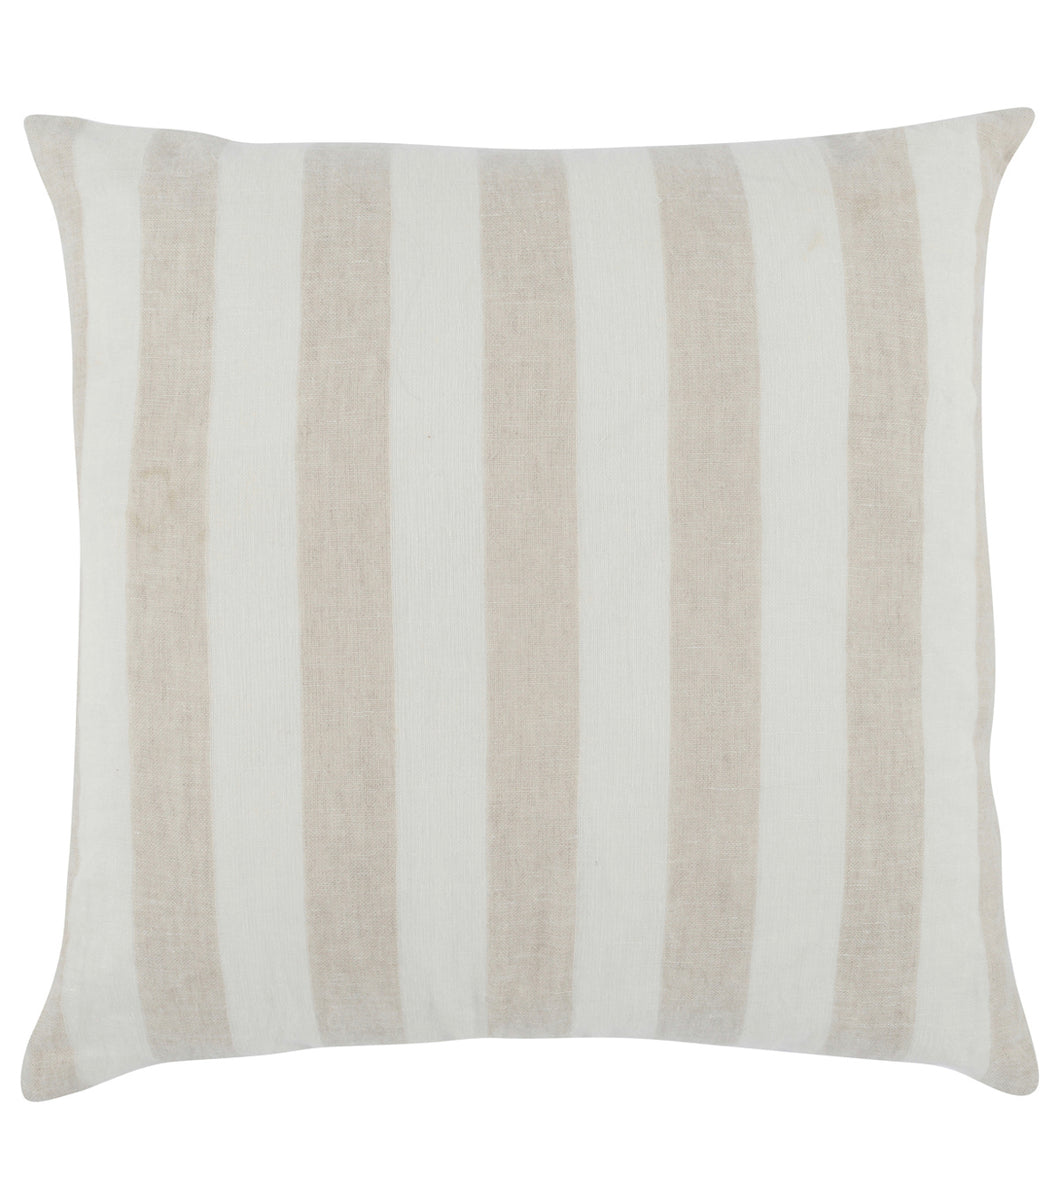 Striped Linen Down Filled Pillow